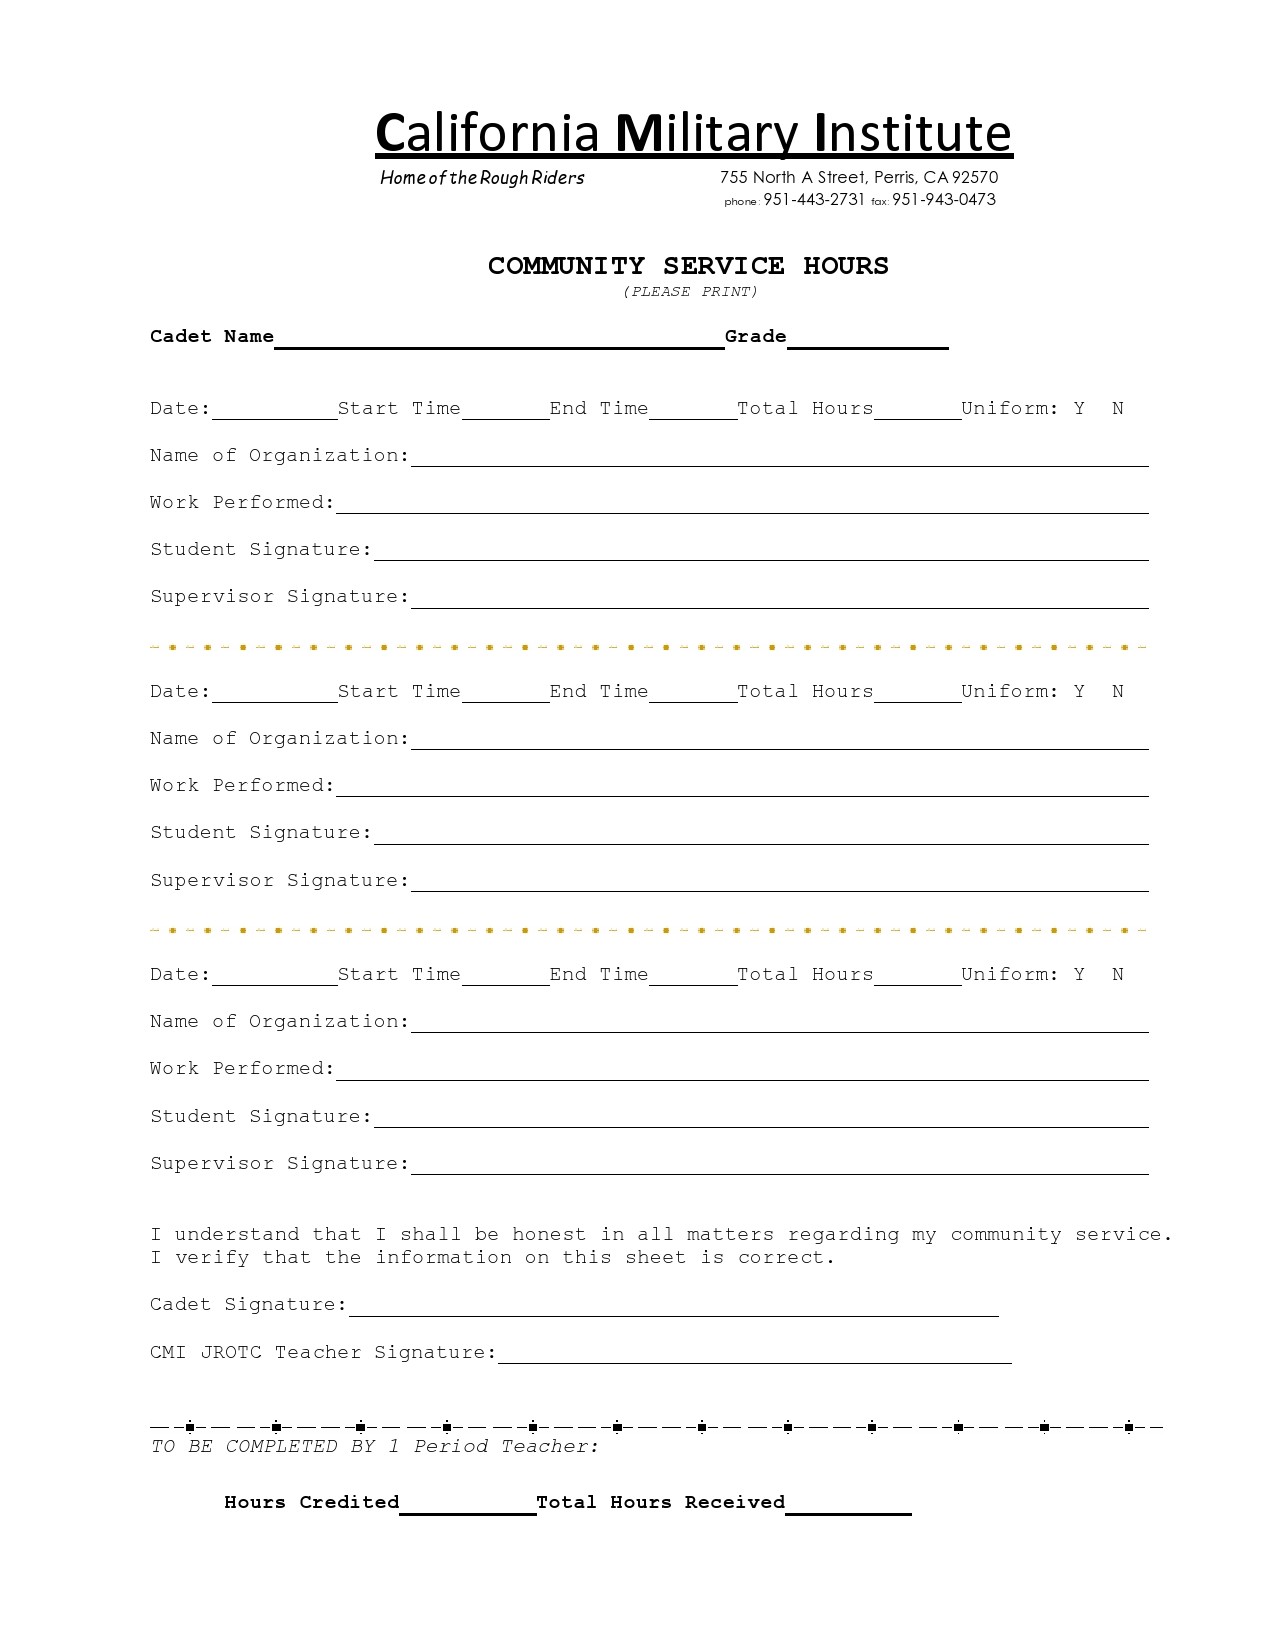 Free community service form 26